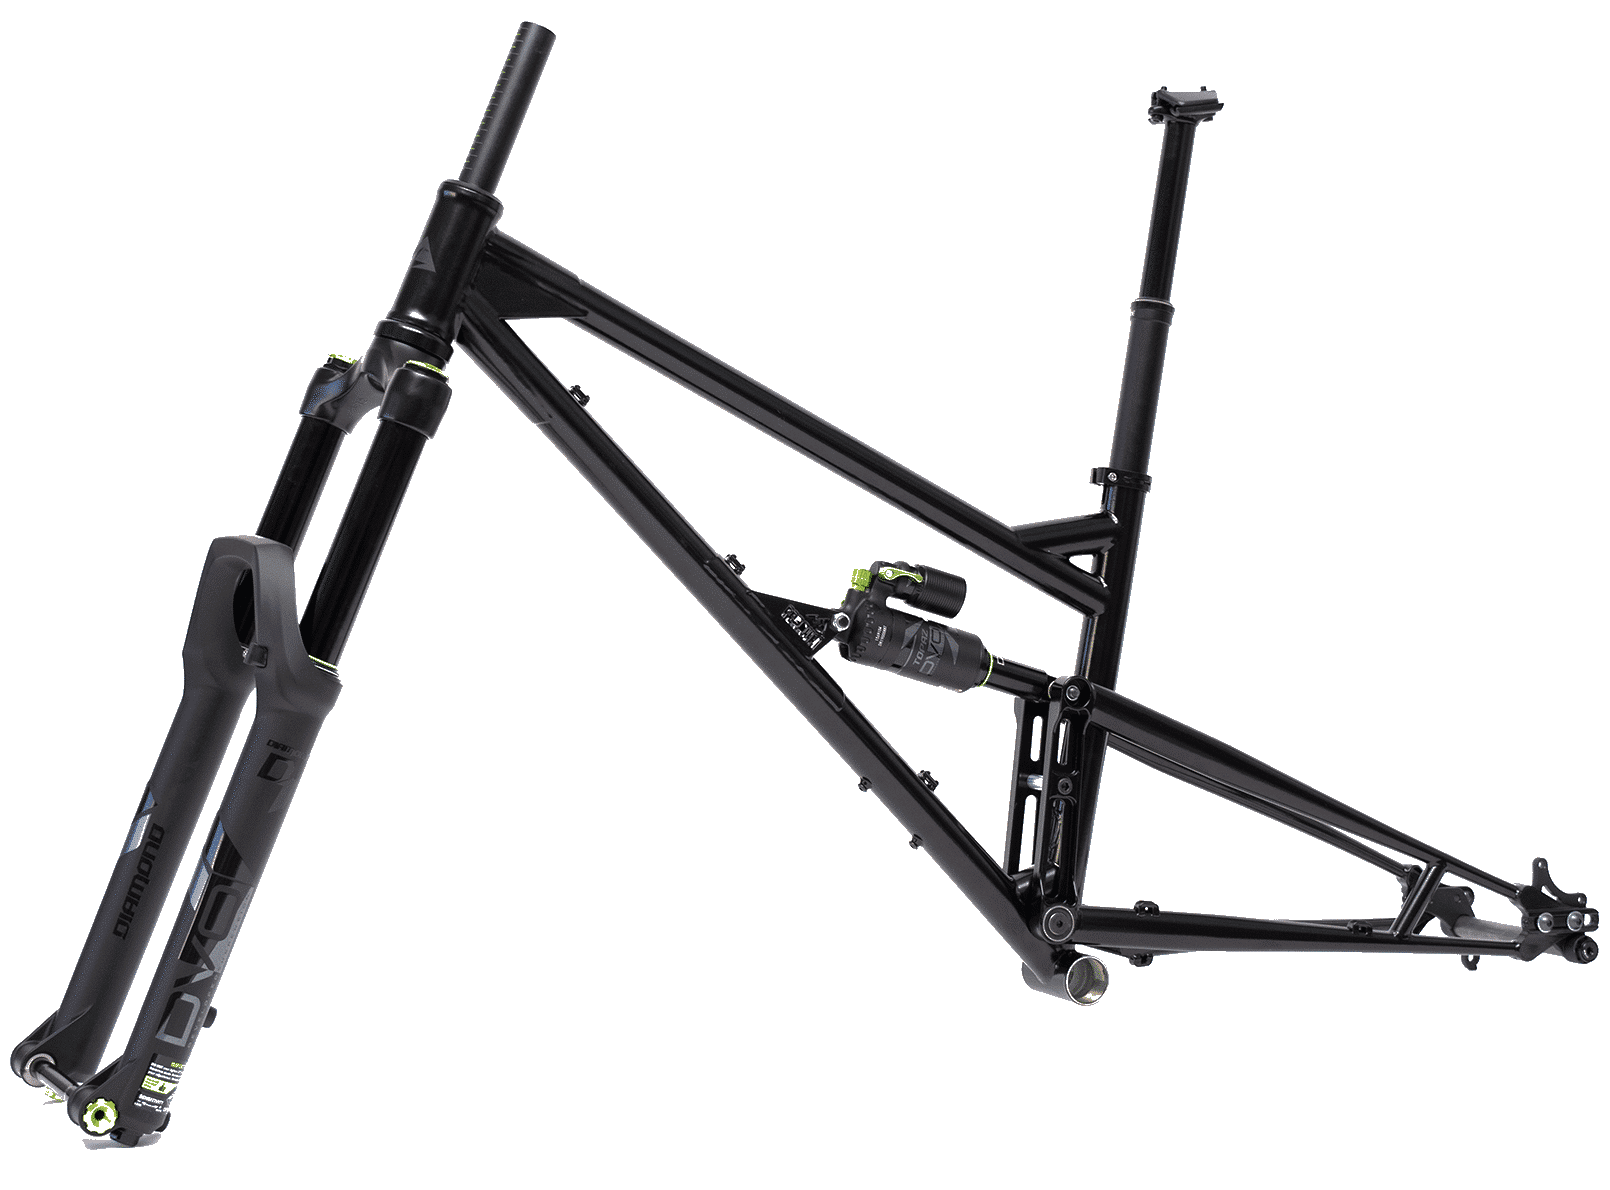 NV 170mm X DVO Suspension Steel MTB Frame Dream Mountain Bike Build Kit